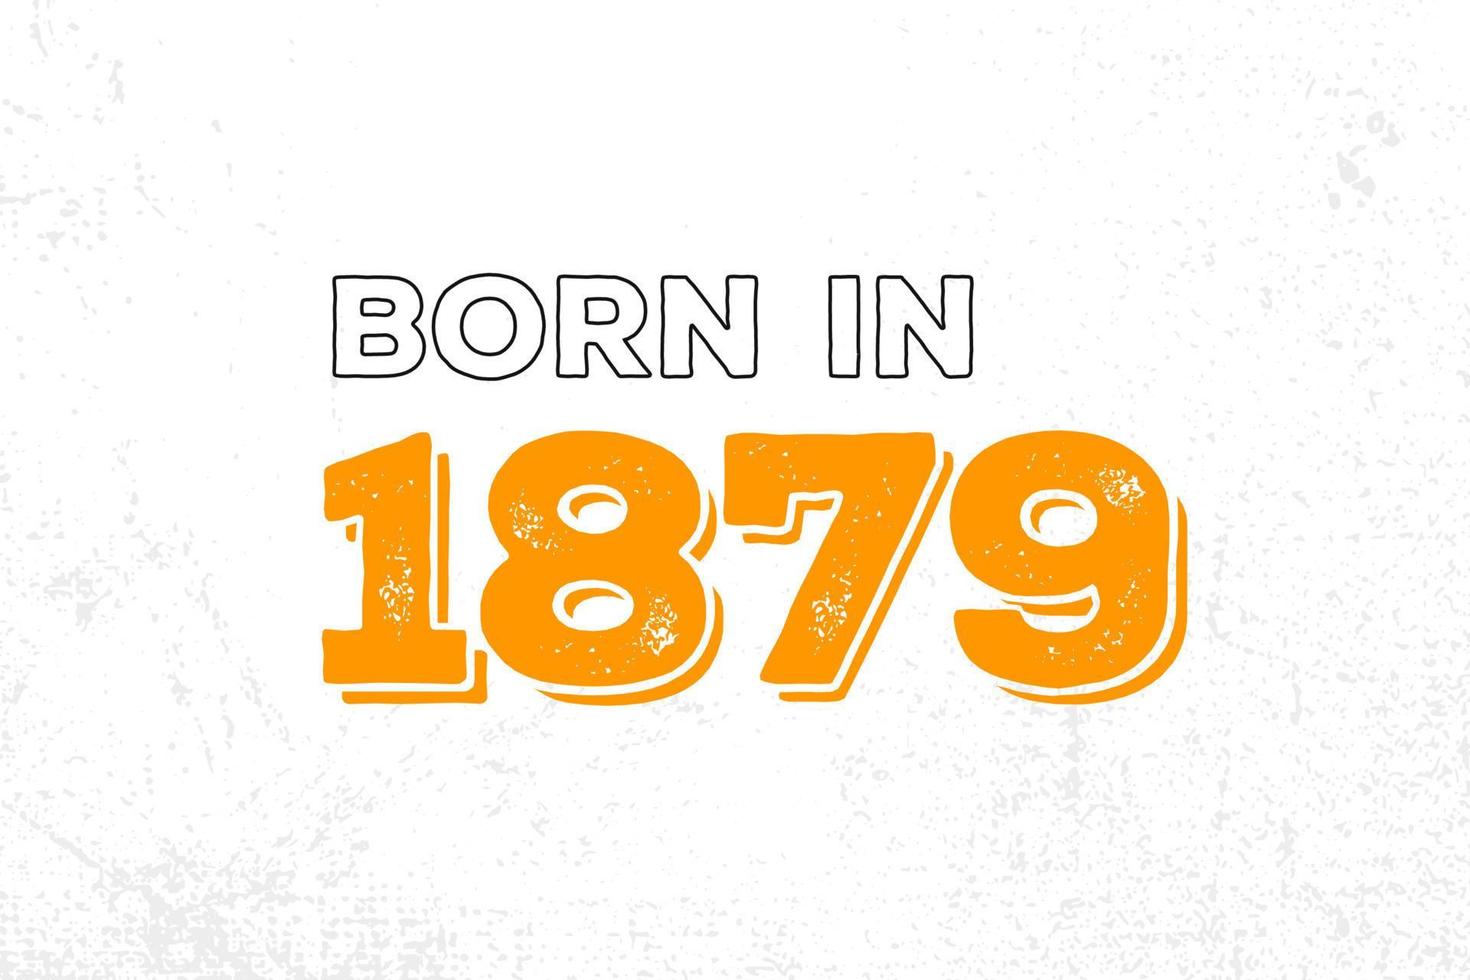 geboren 1879. stolzes 1879 geburtstagsgeschenk t-shirt design vektor